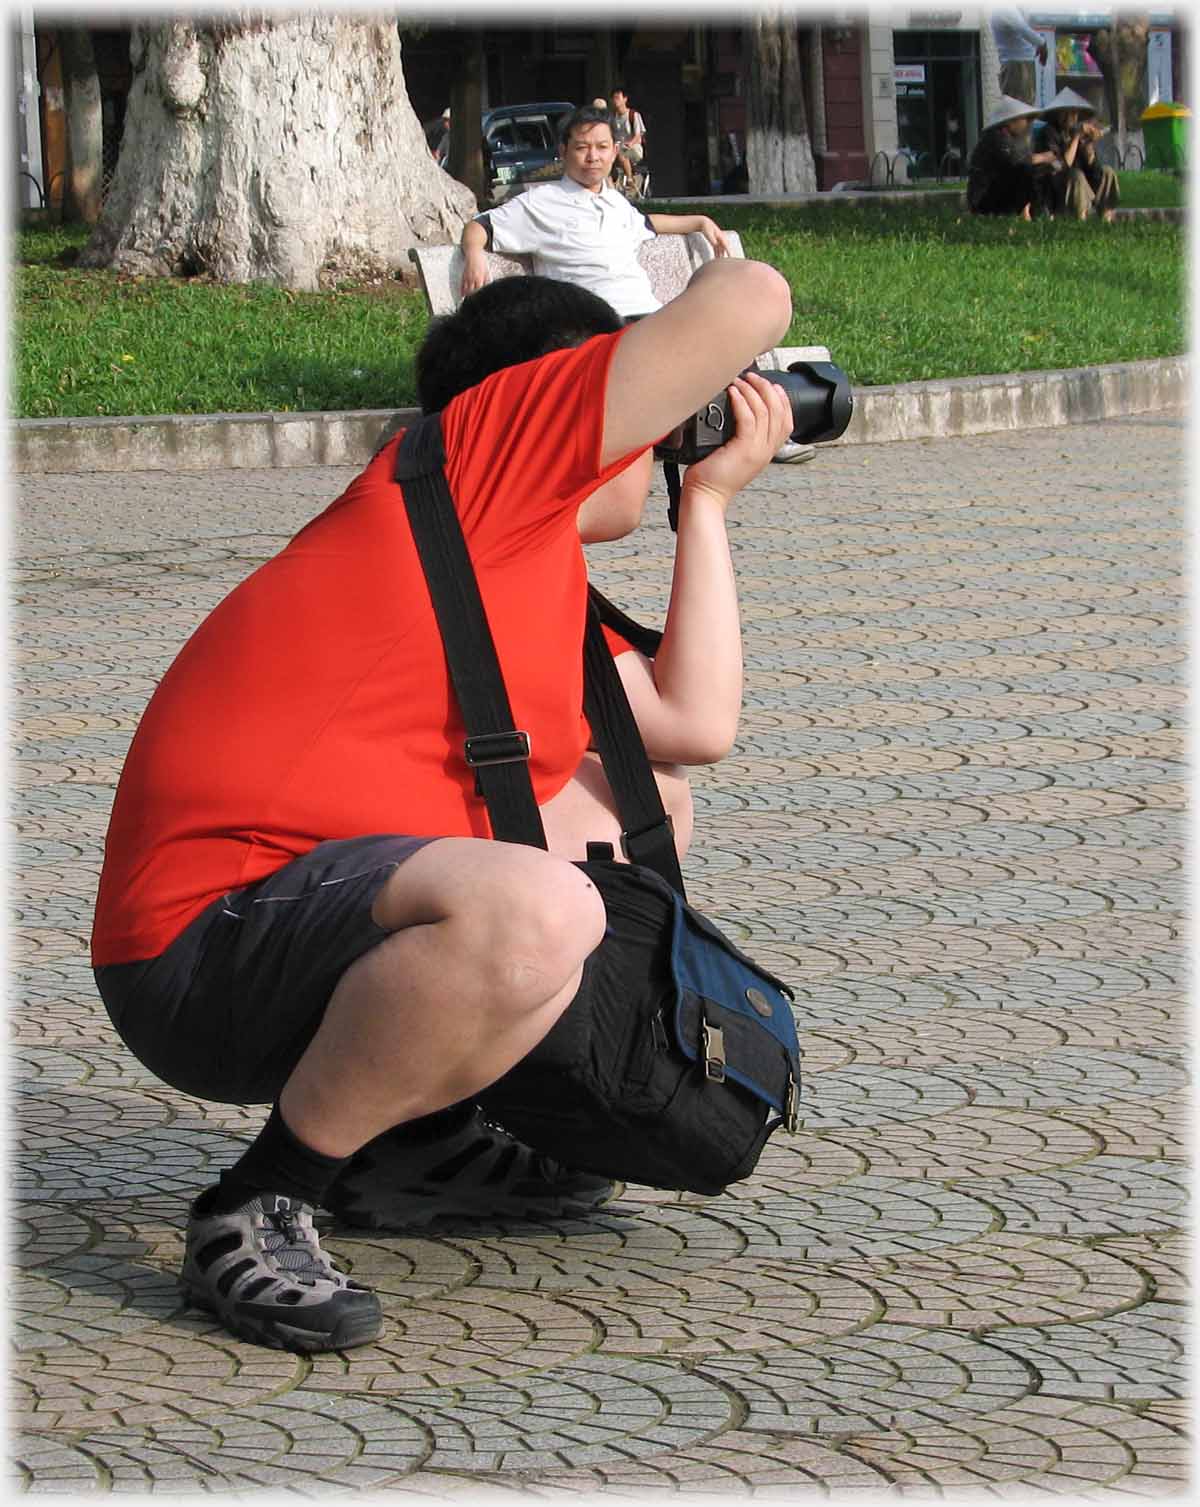 Overweight photographer squatting taking shot.